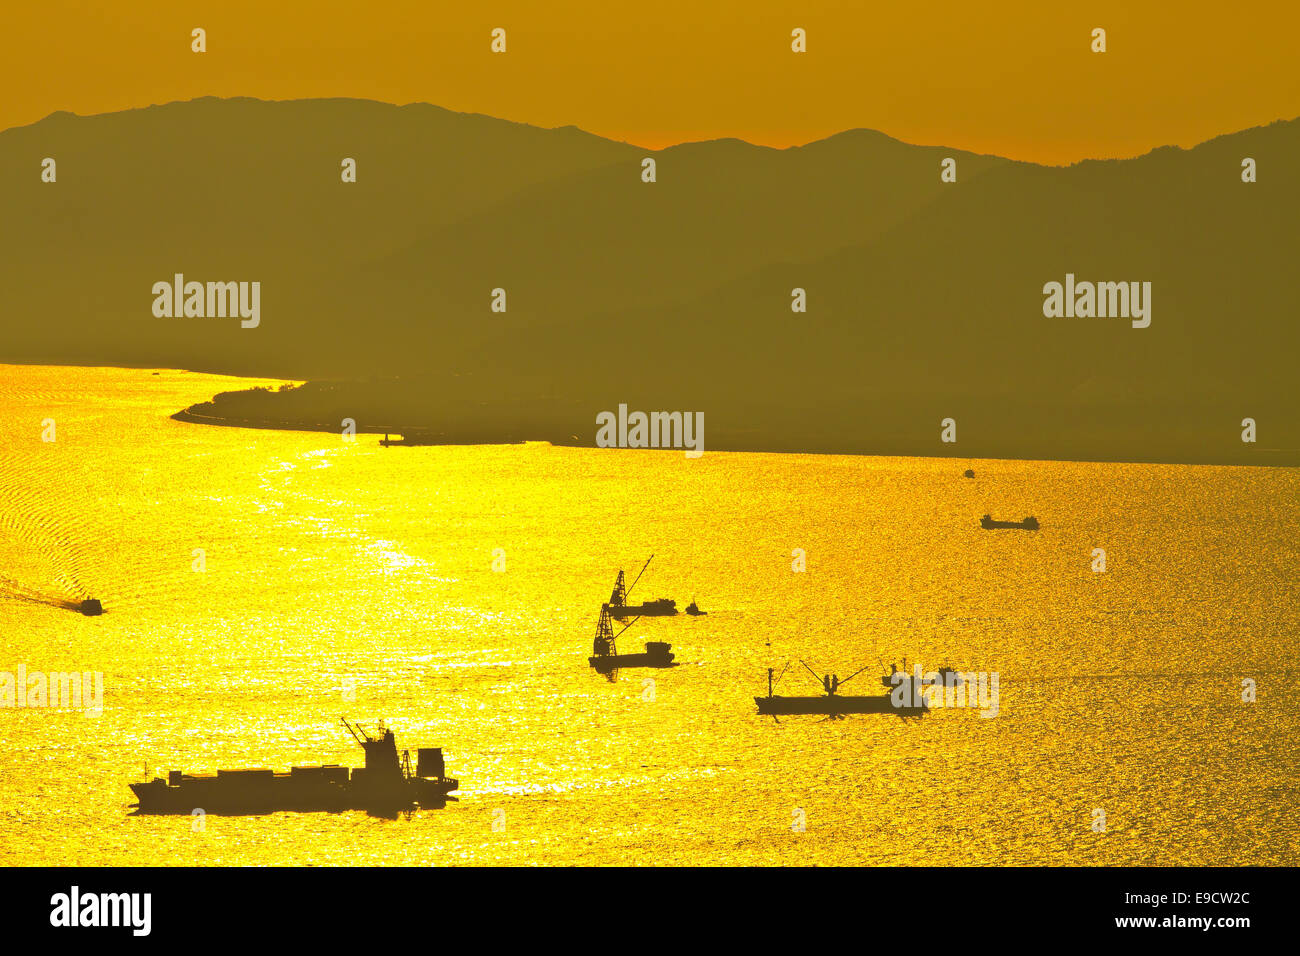 Massengutfrachter Schiff bei Sonnenuntergang im Meer Stockfoto